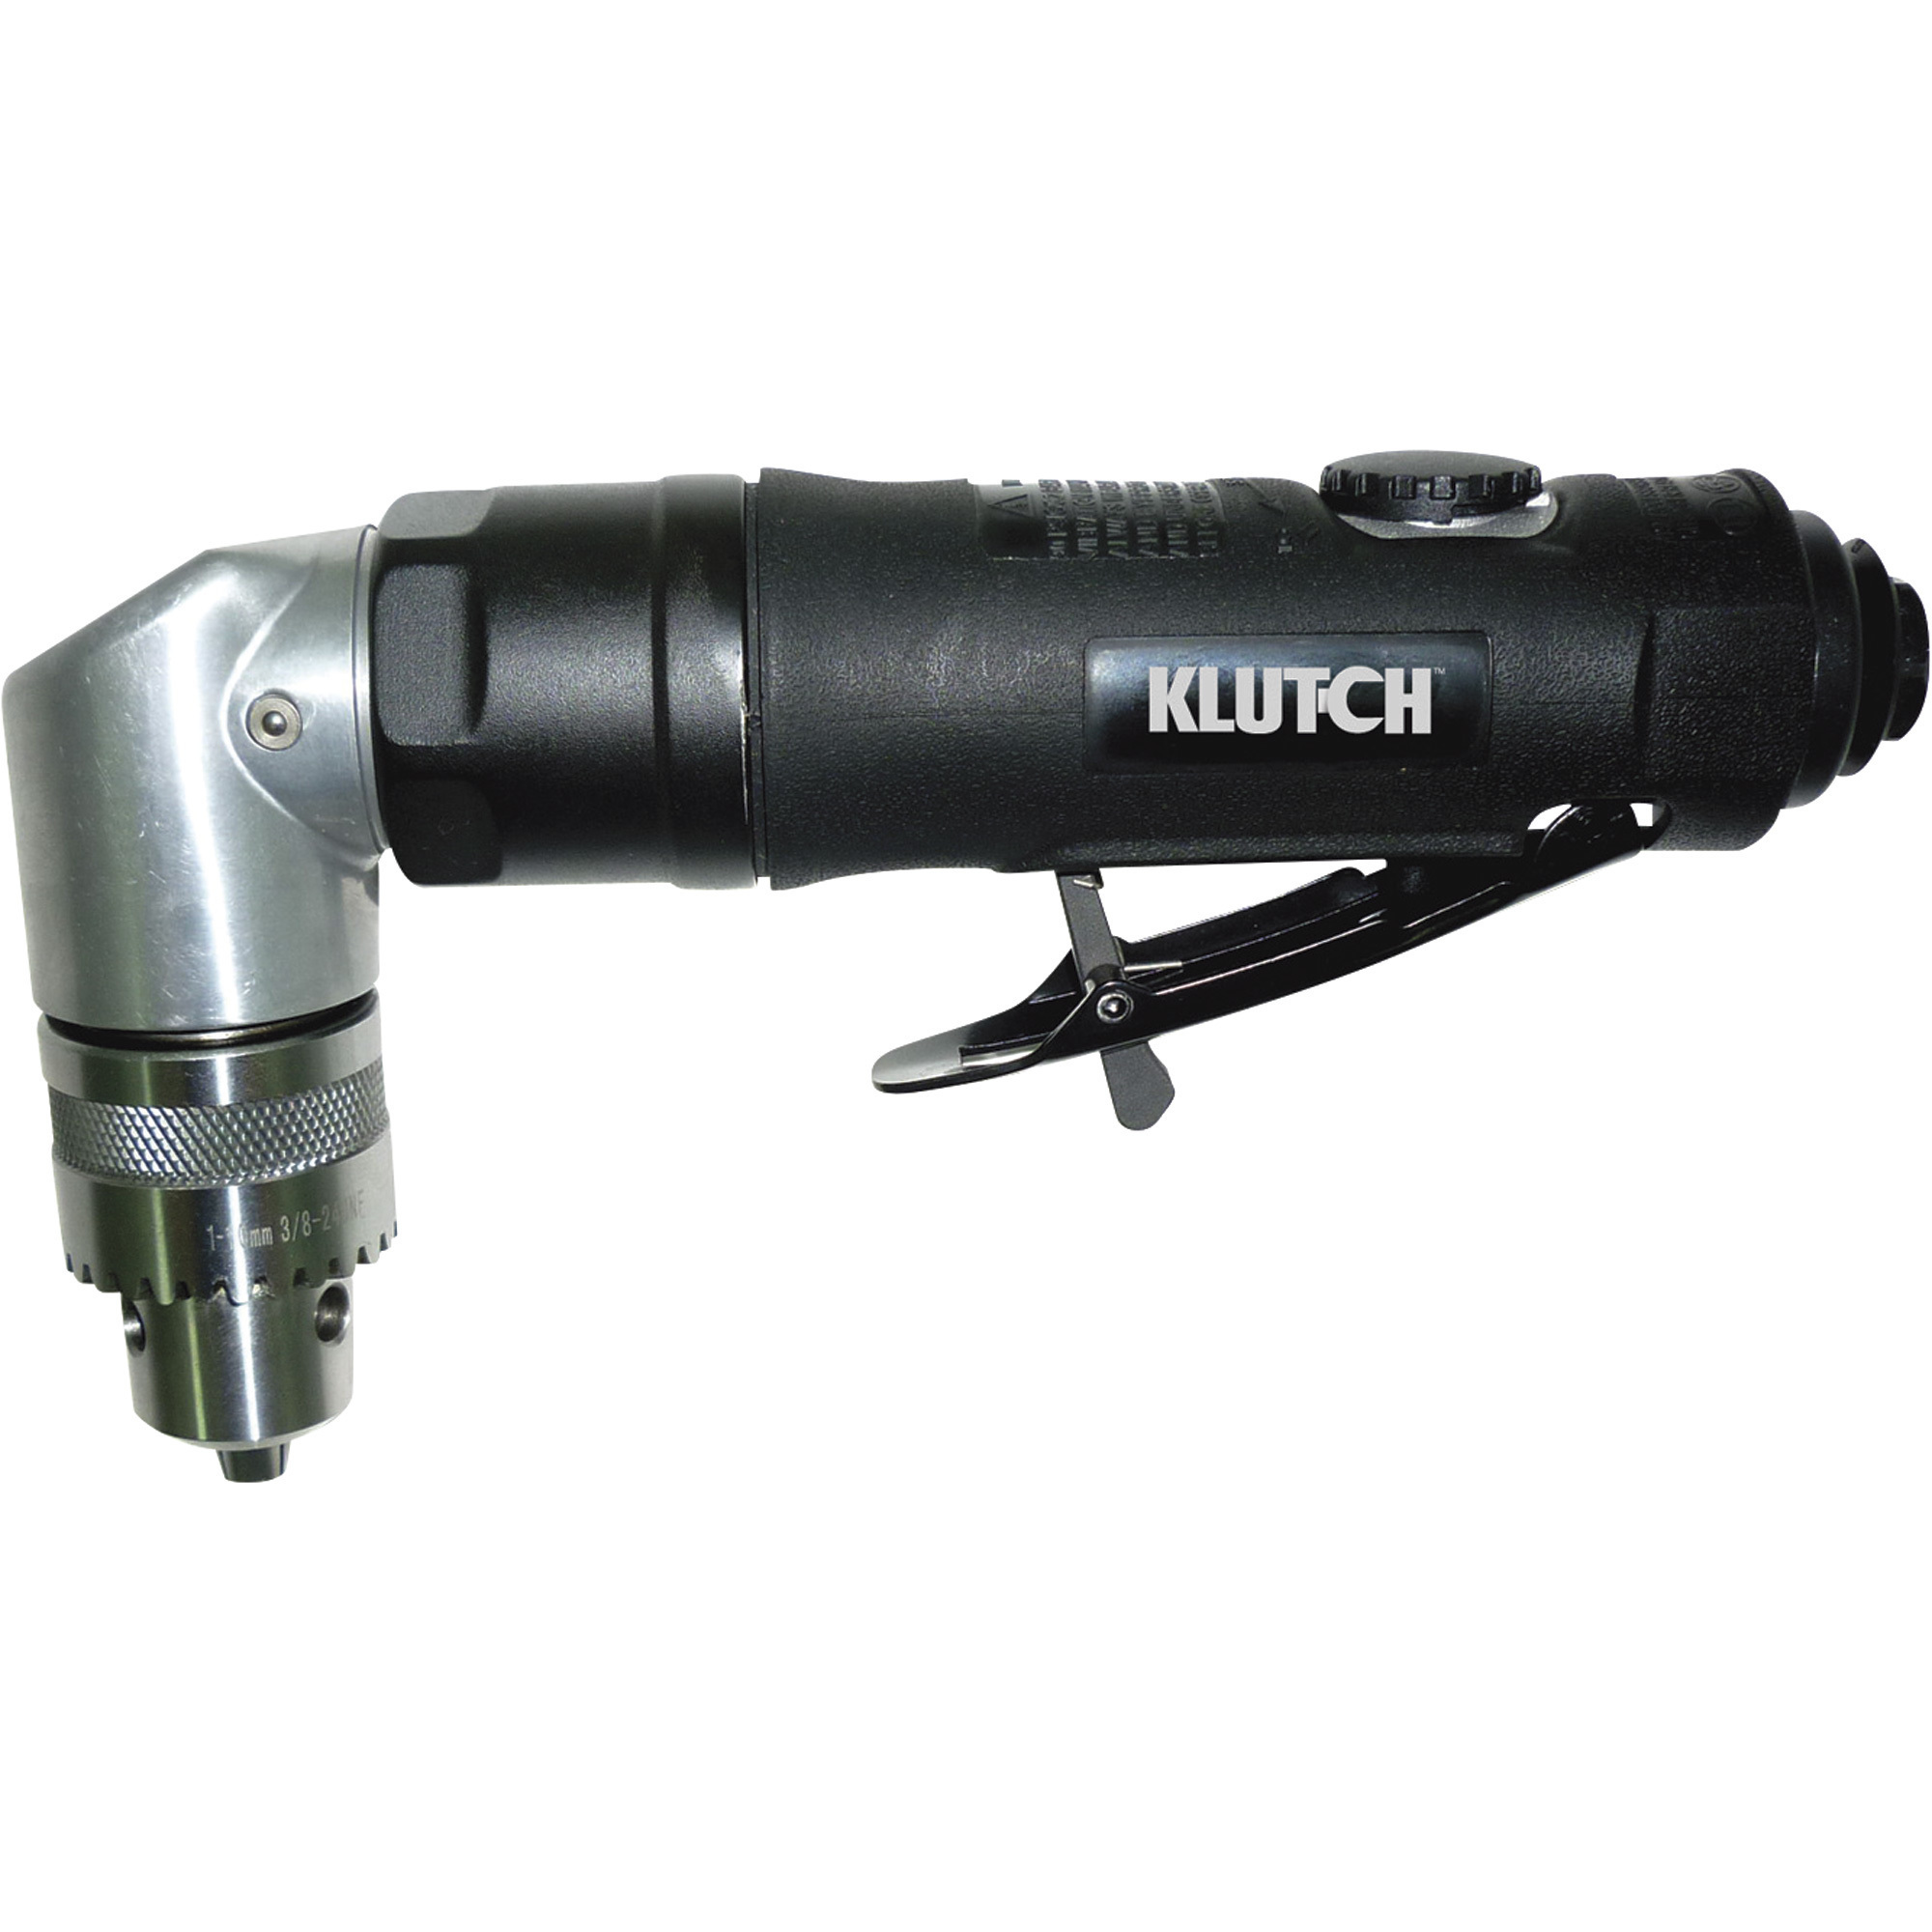 Klutch Low-Noise 90Â° Angle Air Drill, 3/8Inch Chuck, 1800 RPM, 3 CFM